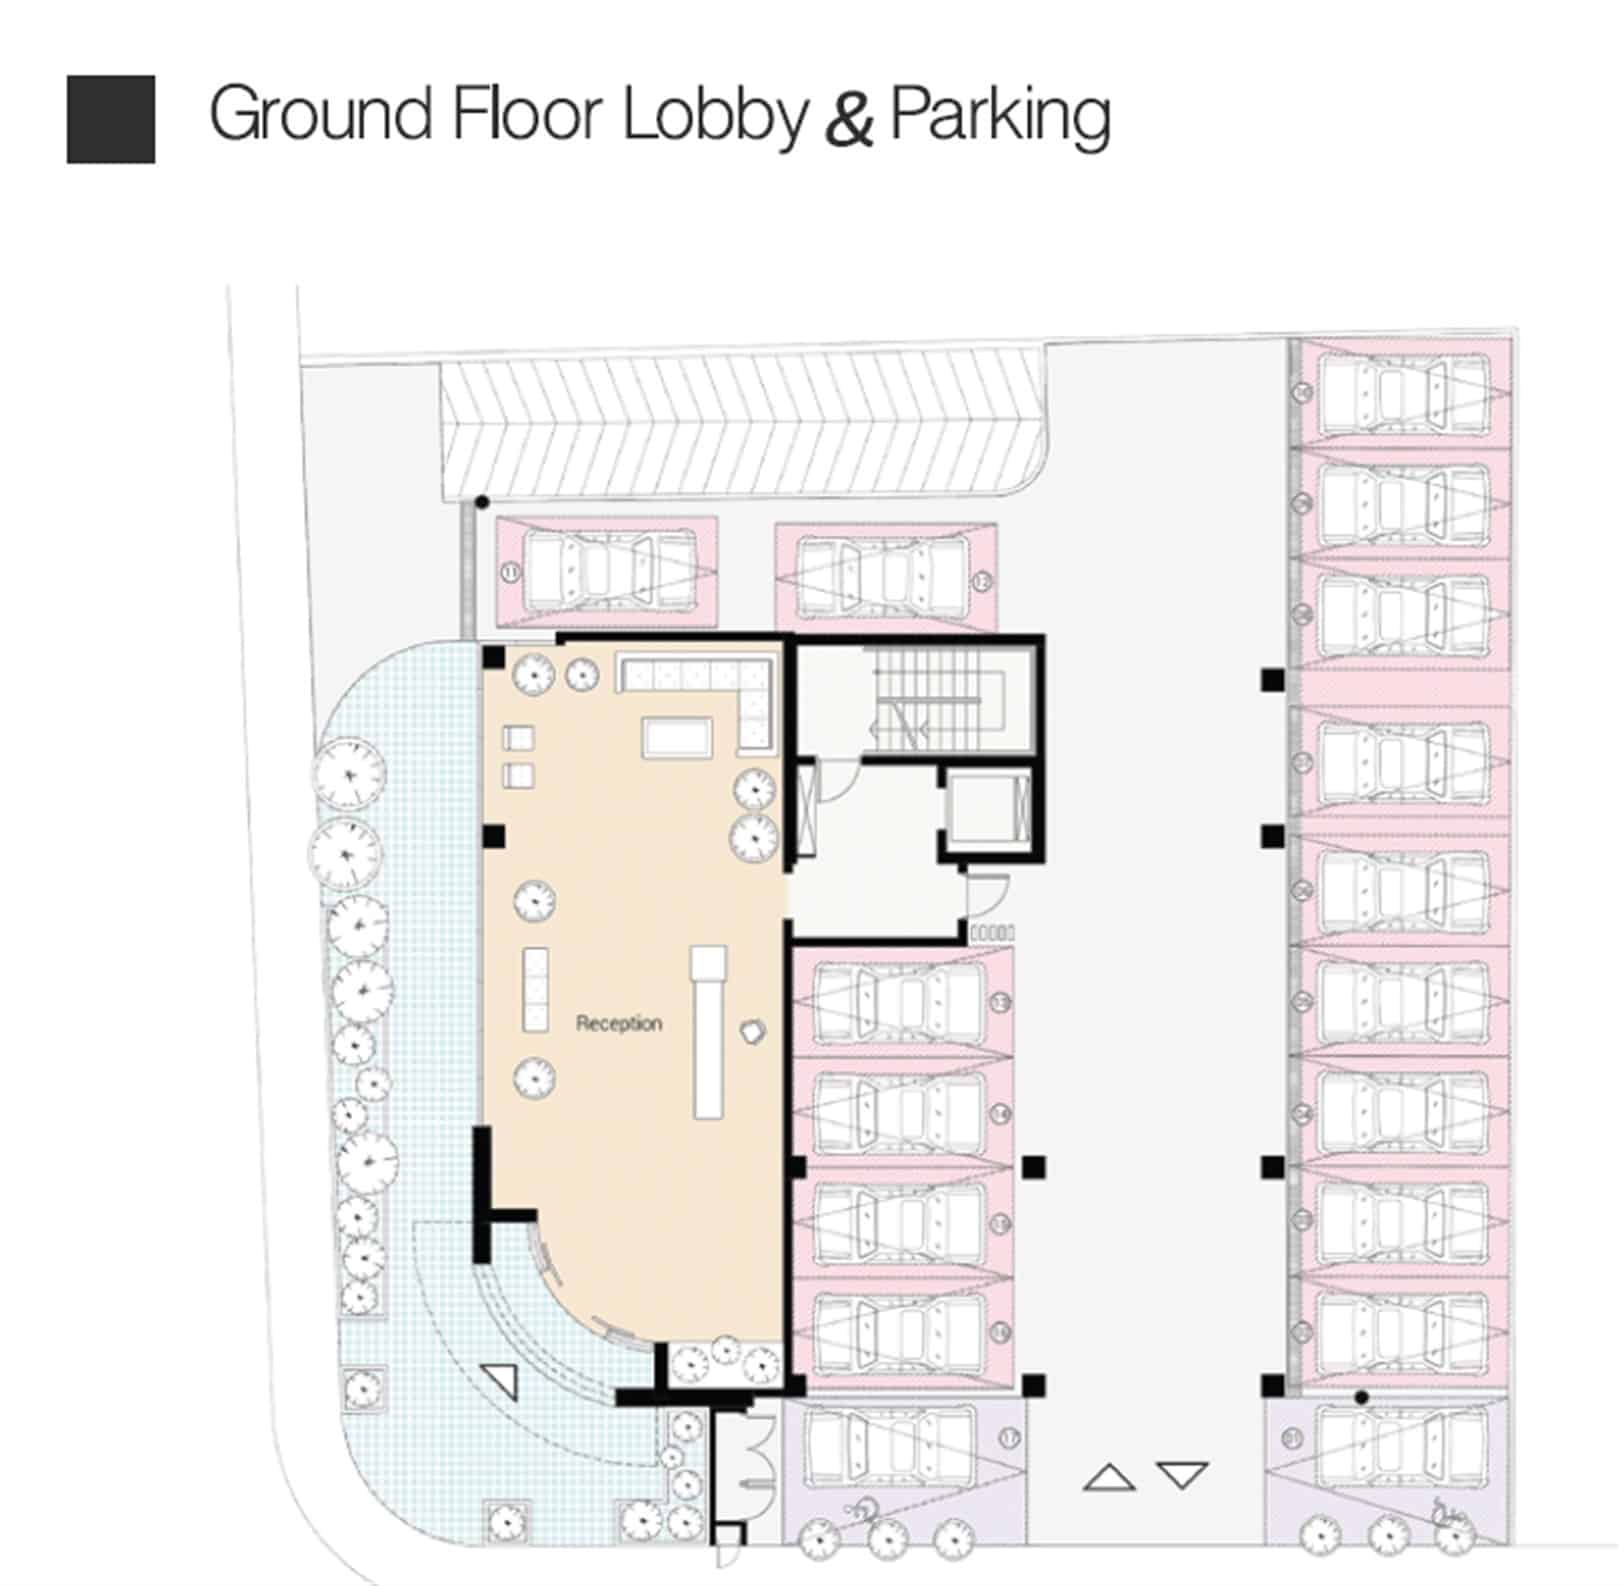 Ground Floor Lobby & Parking